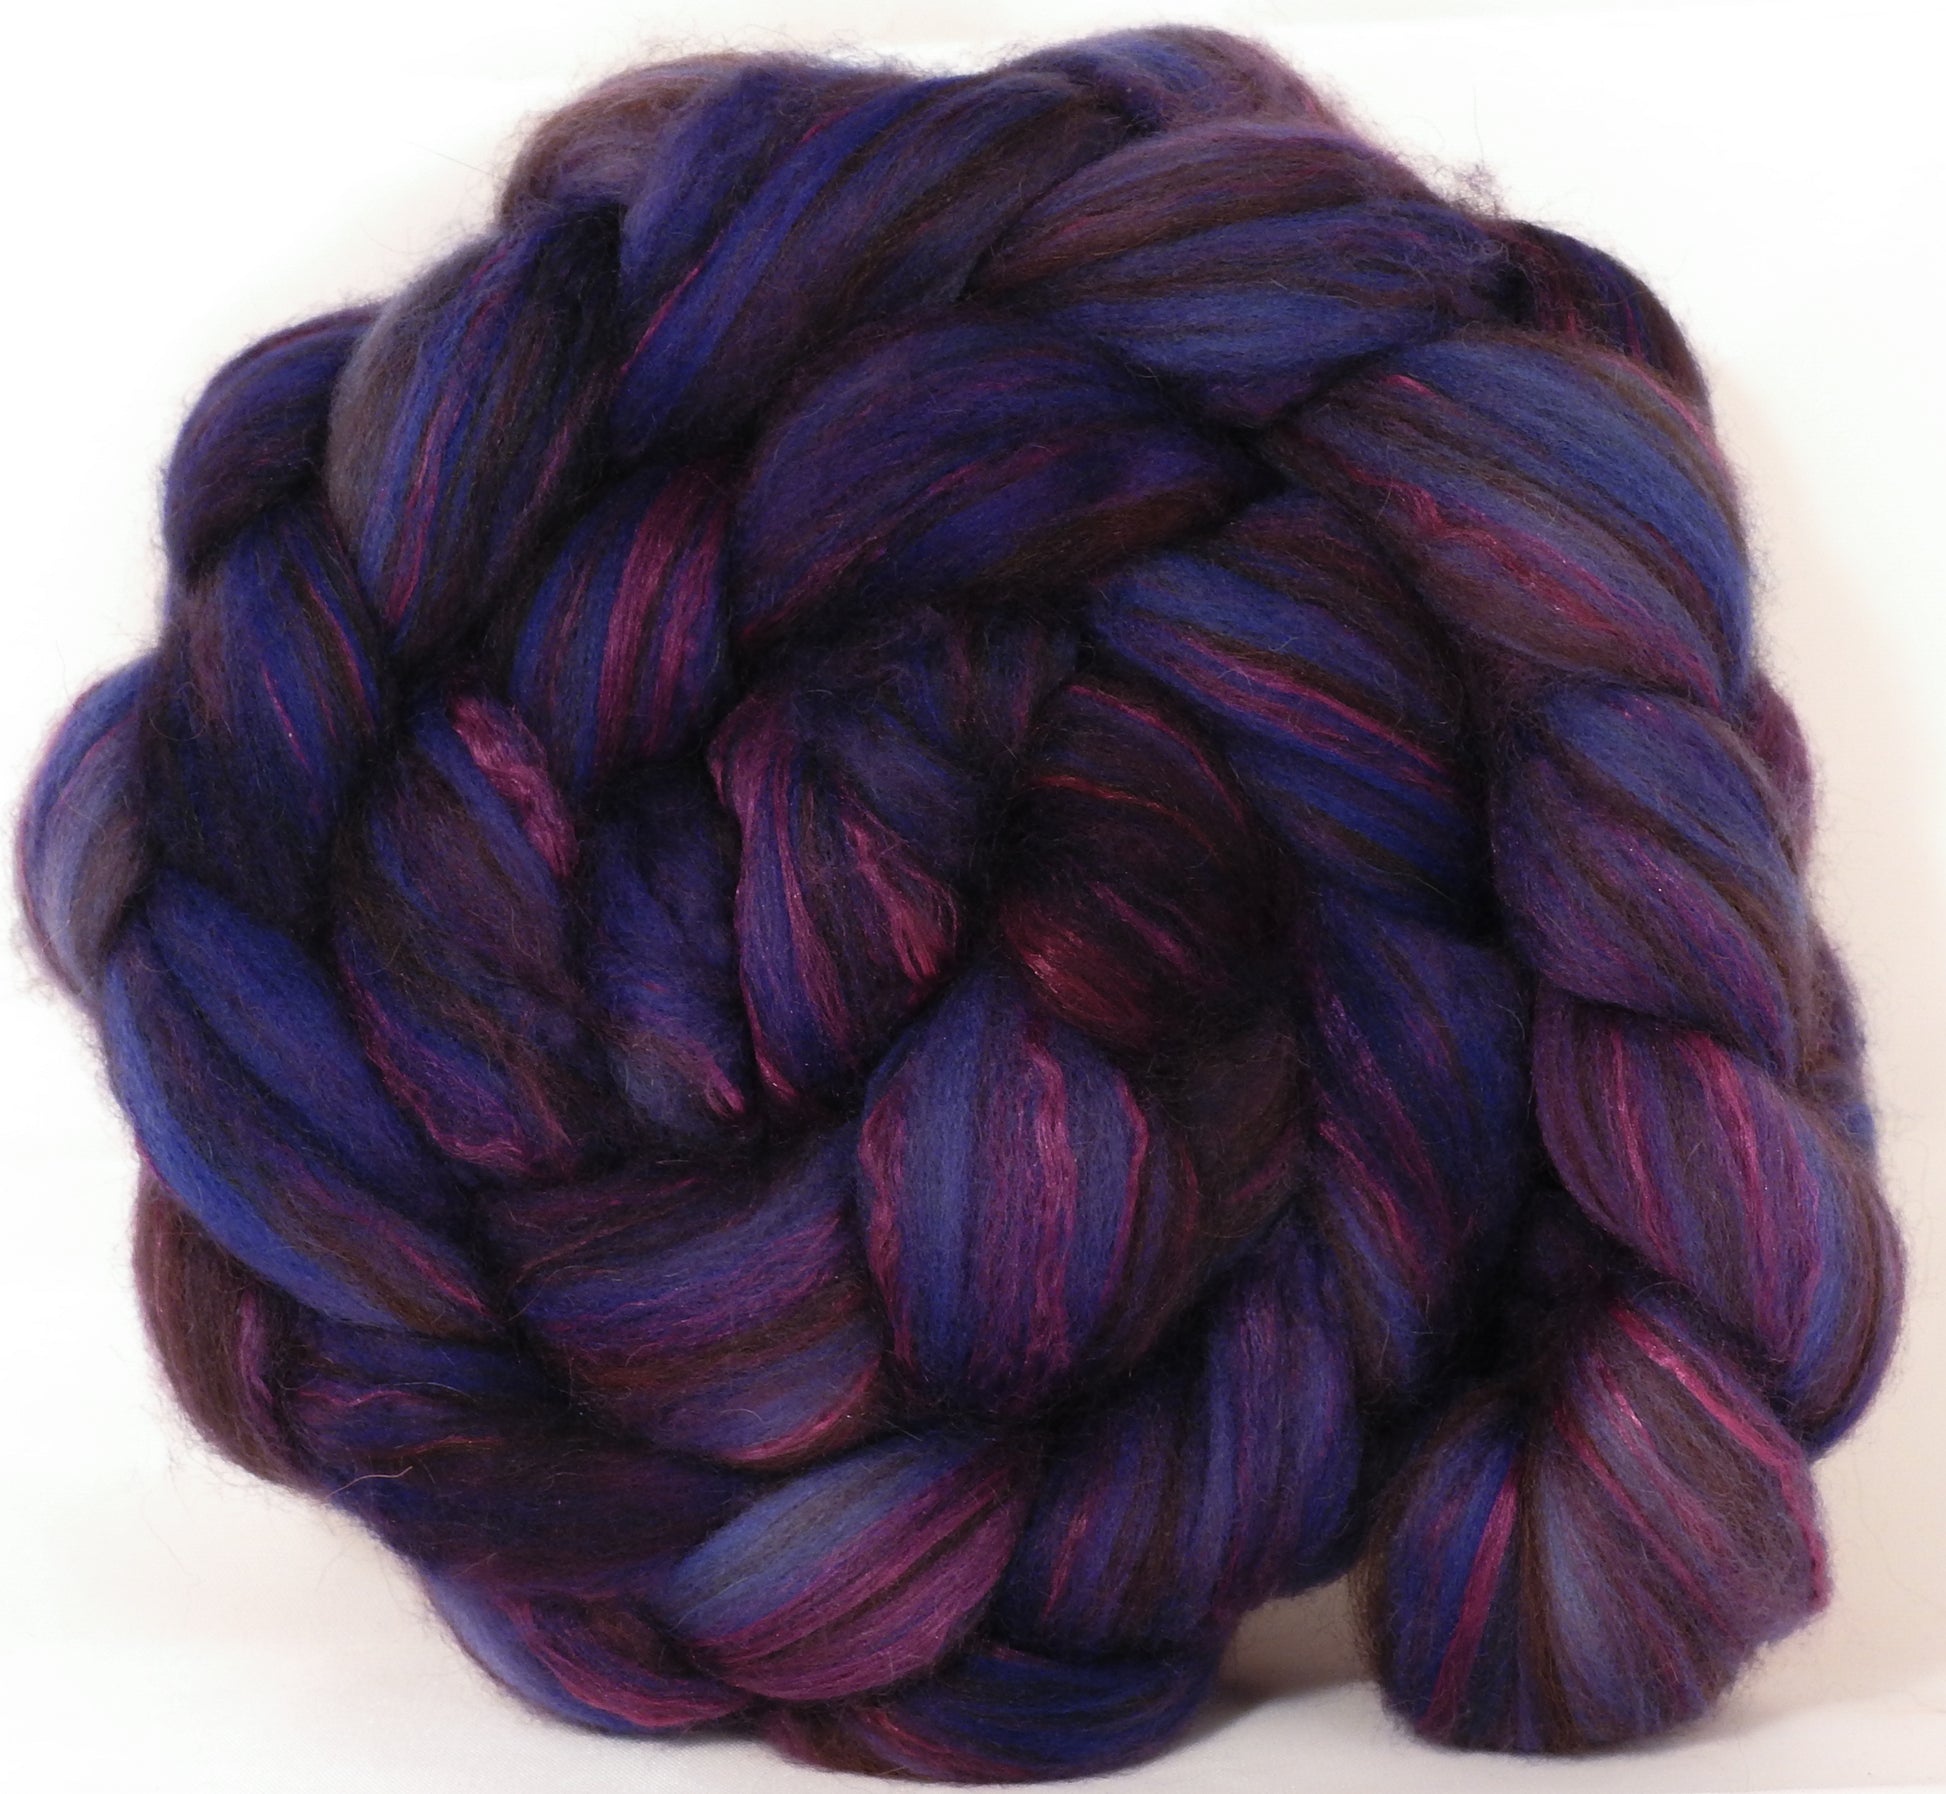 Hand dyed top for spinning -Damson Plum  (4.5 oz.) 18.5 mic merino/ camel/ brown alpaca/ mulberry silk/ (40/20/20/20) - Inglenook Fibers